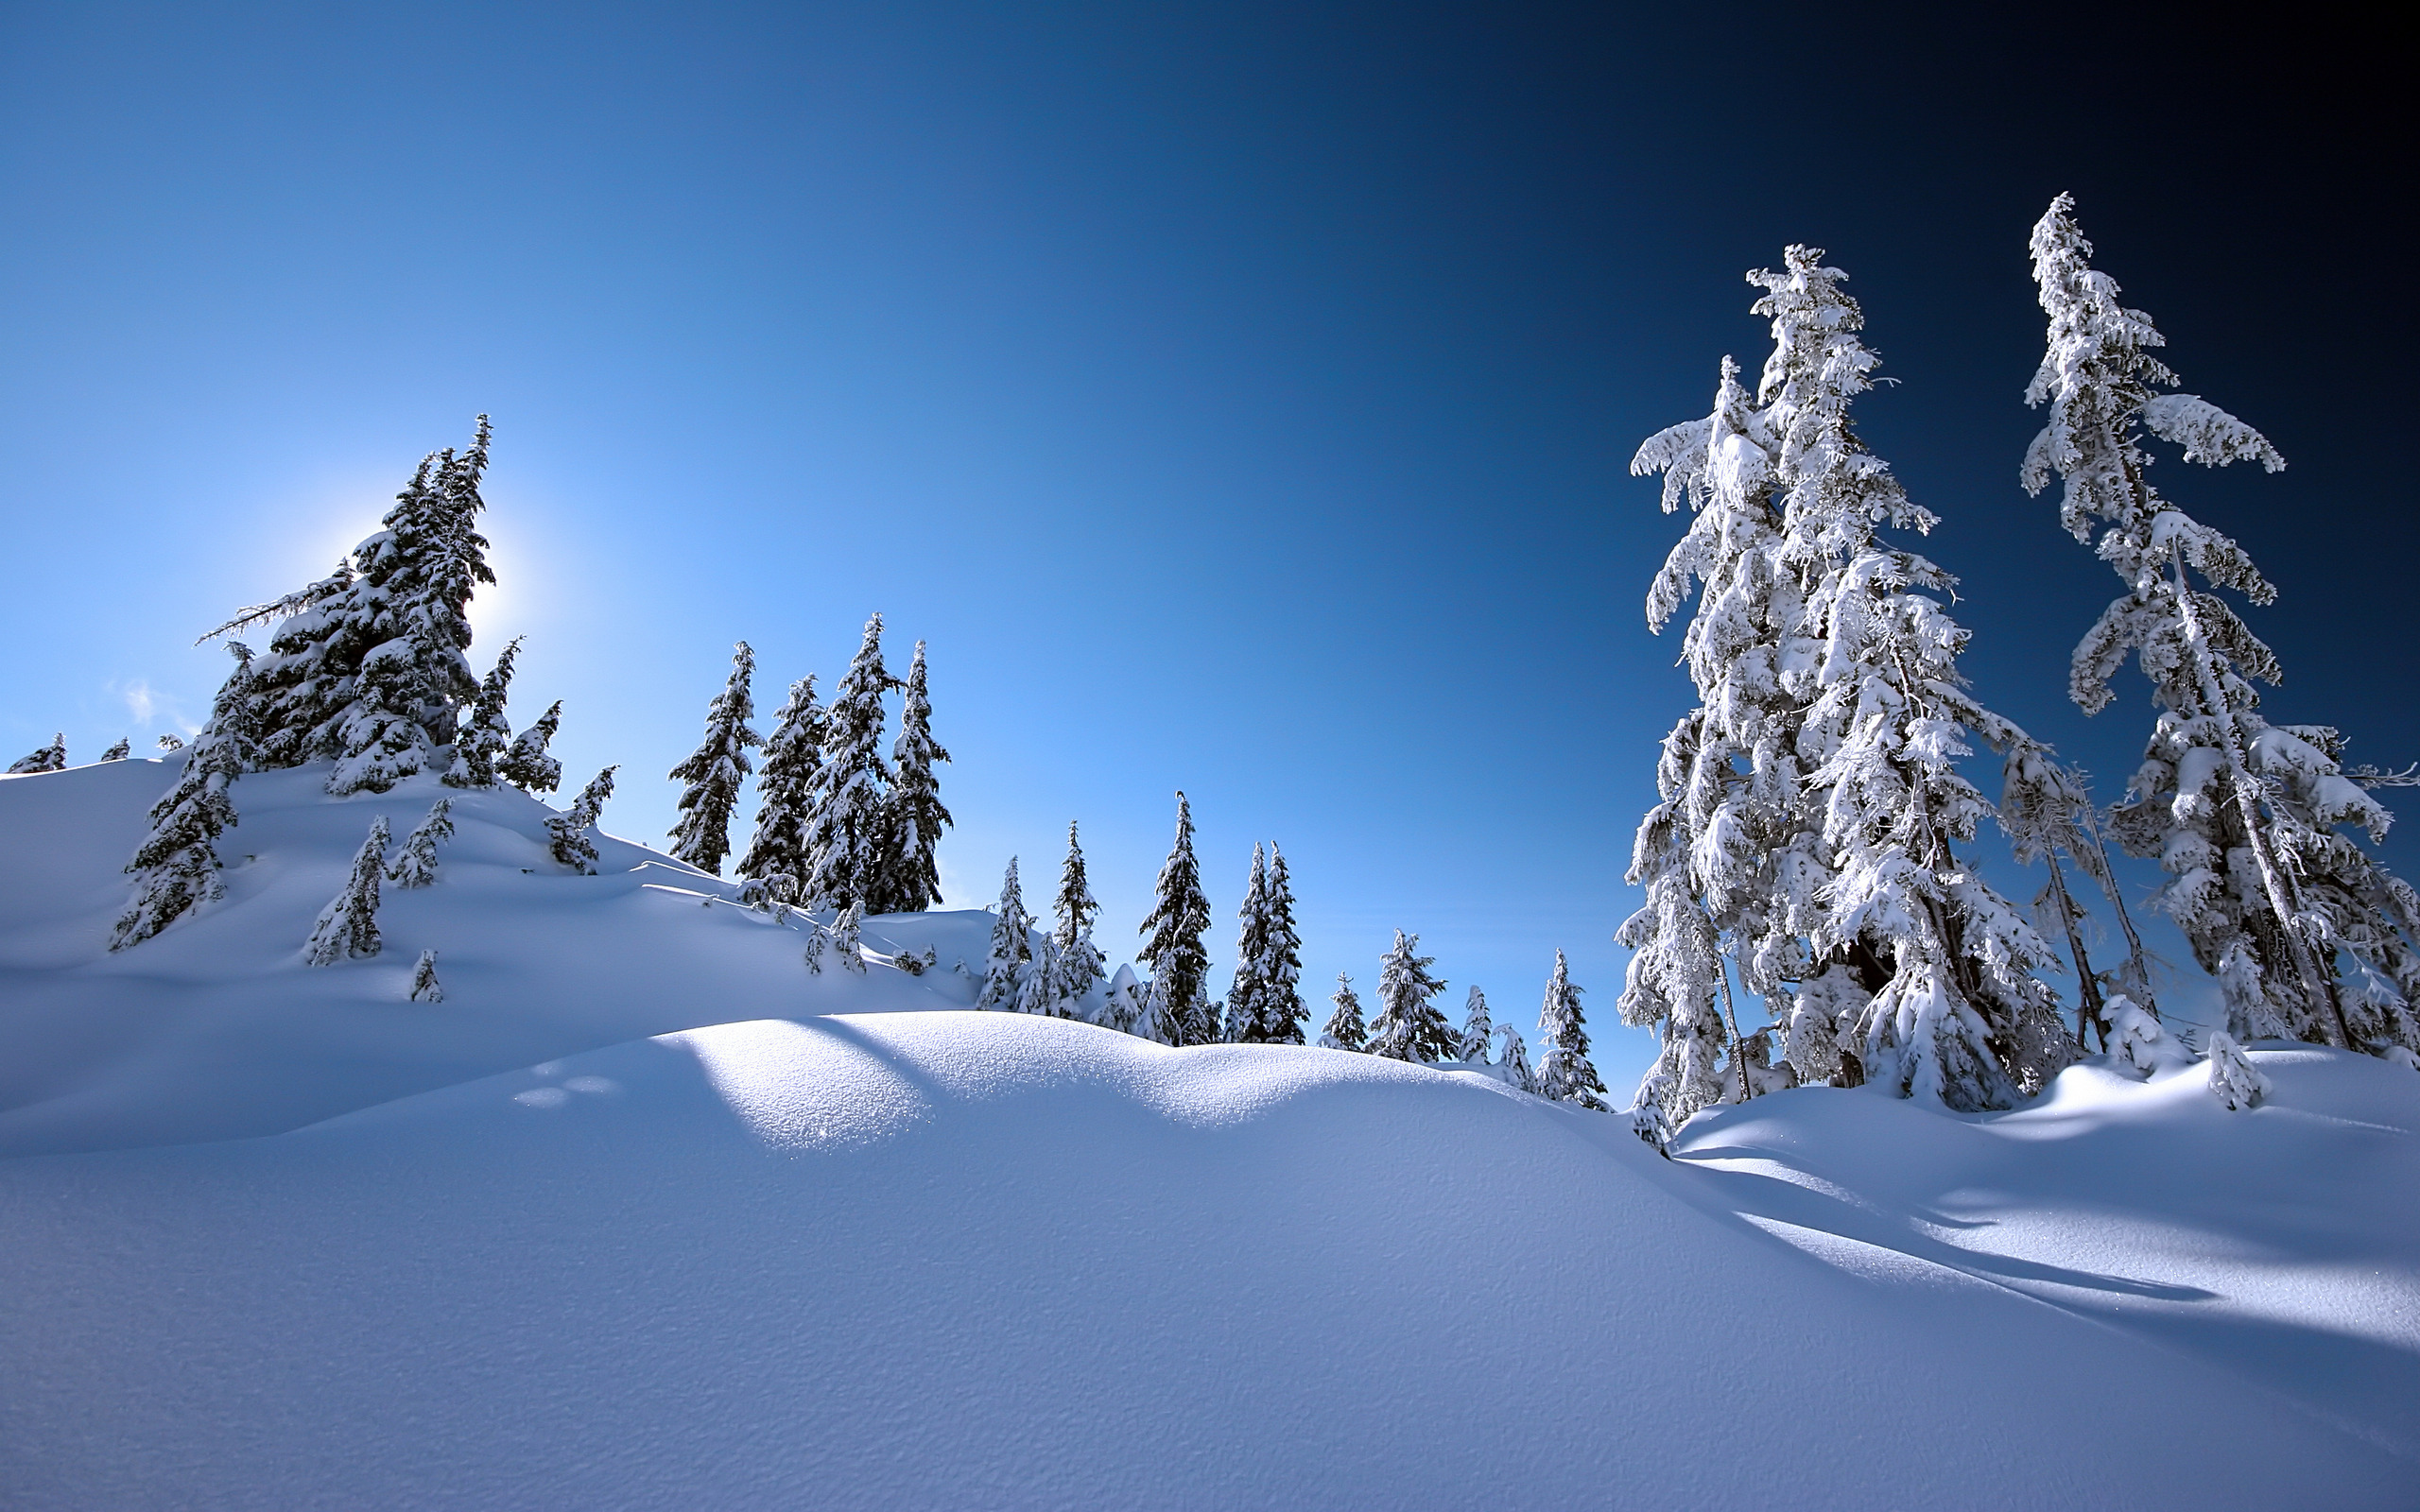 Фотообои зимний пейзаж